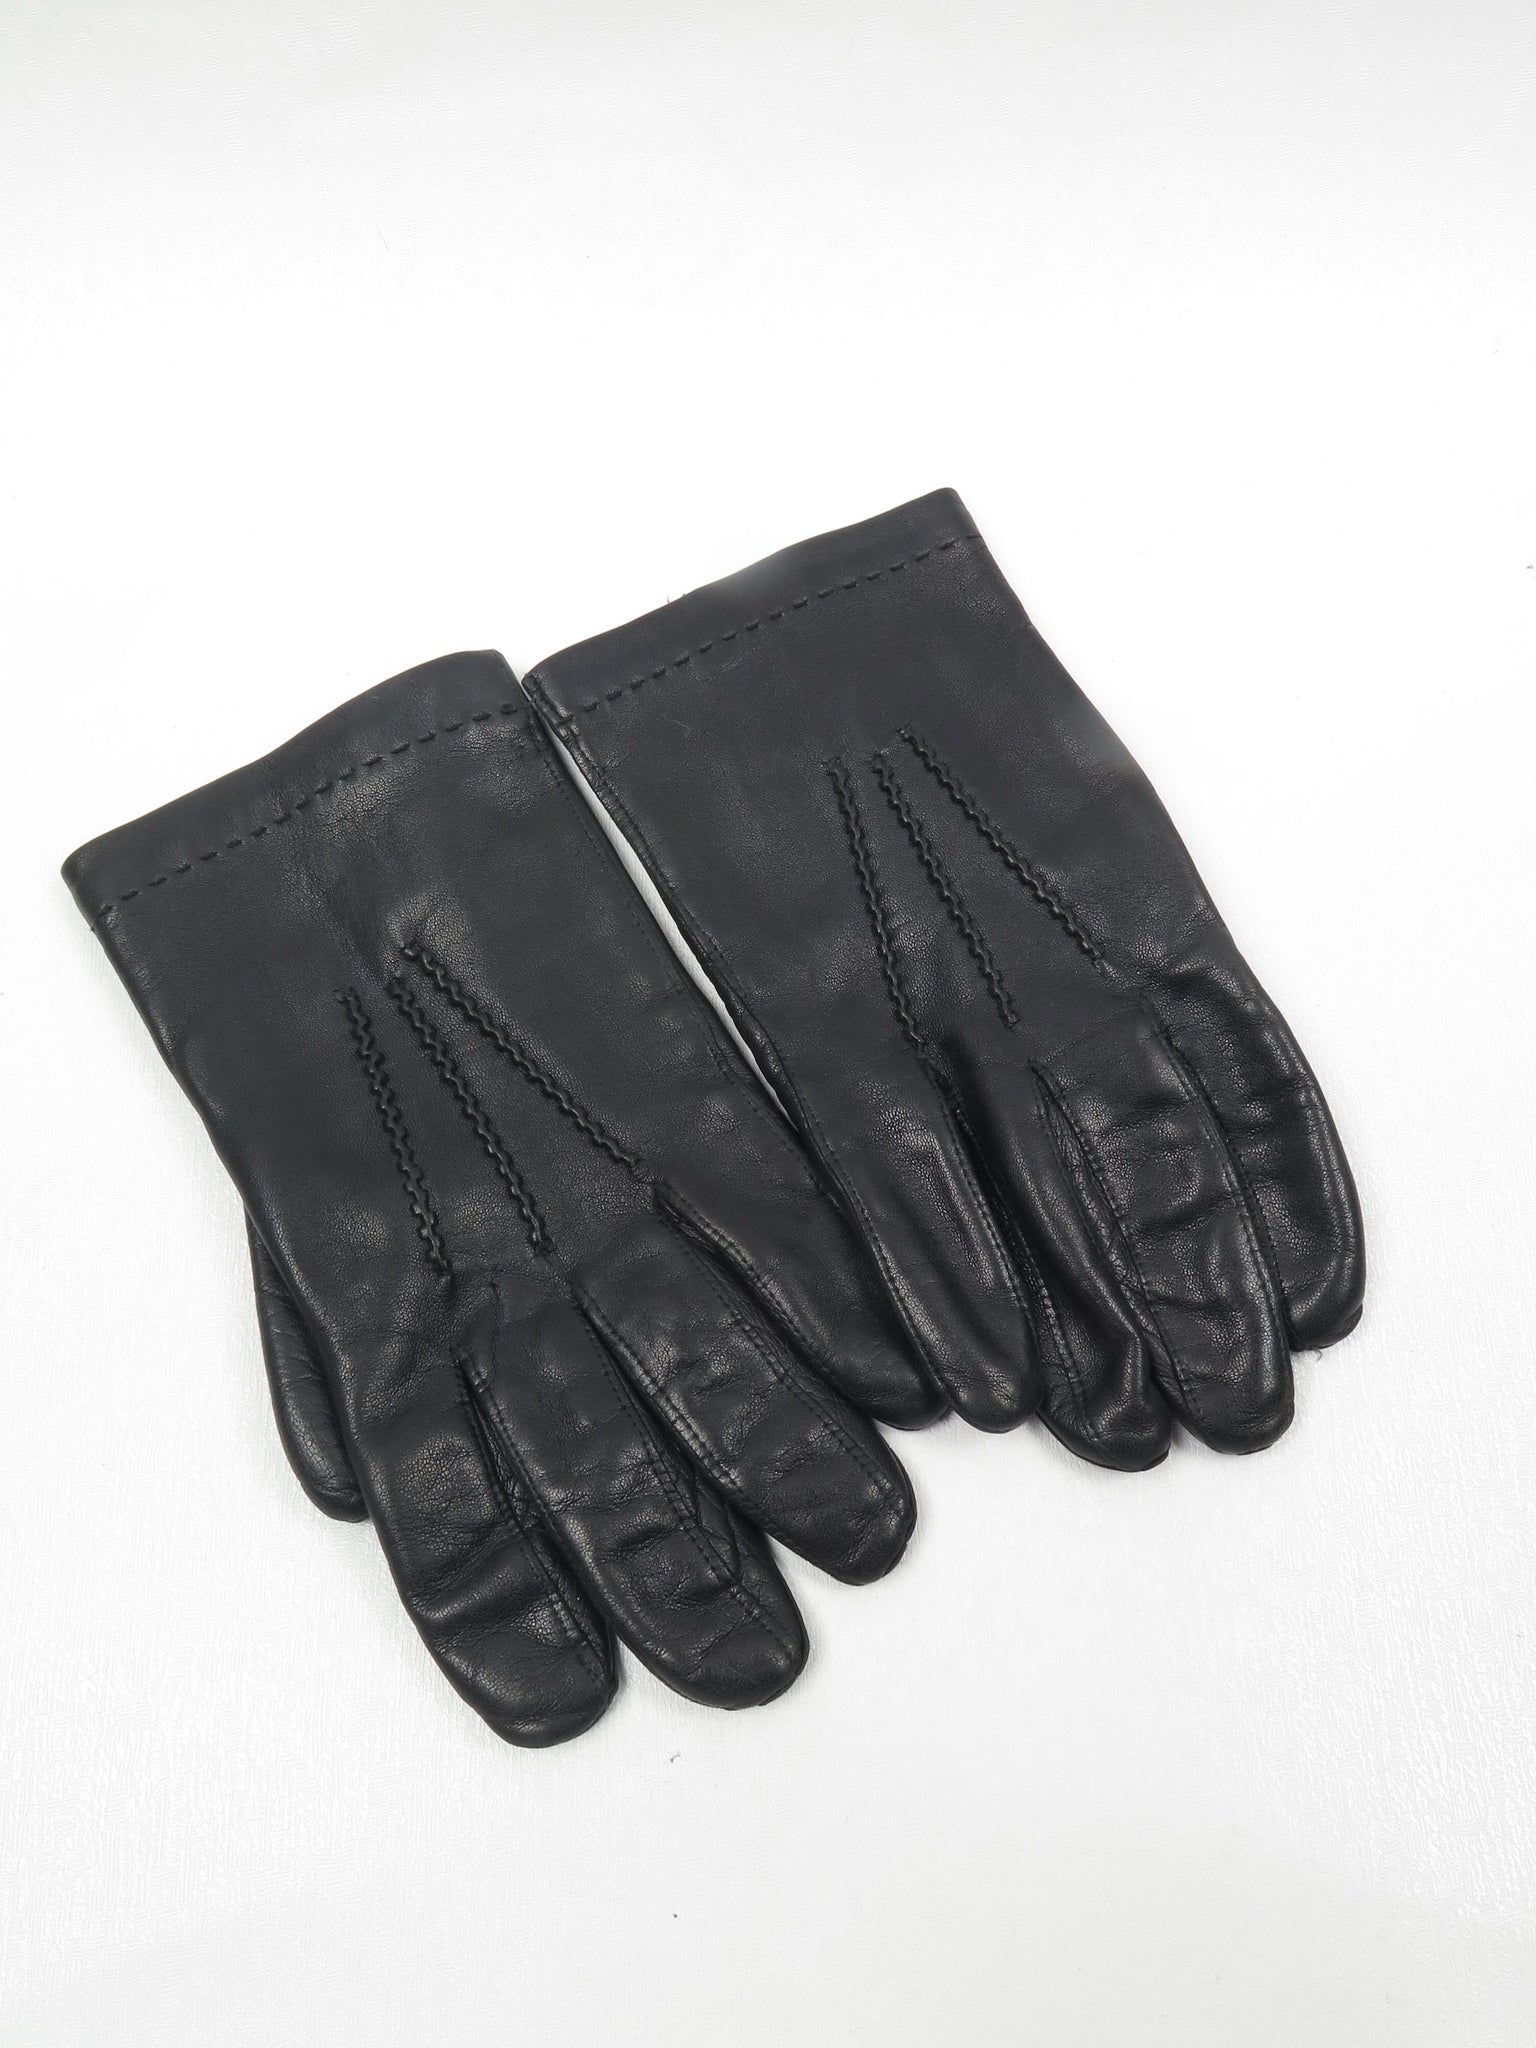 Women's Soft Leather Vintage Gloves Black S/M - The Harlequin